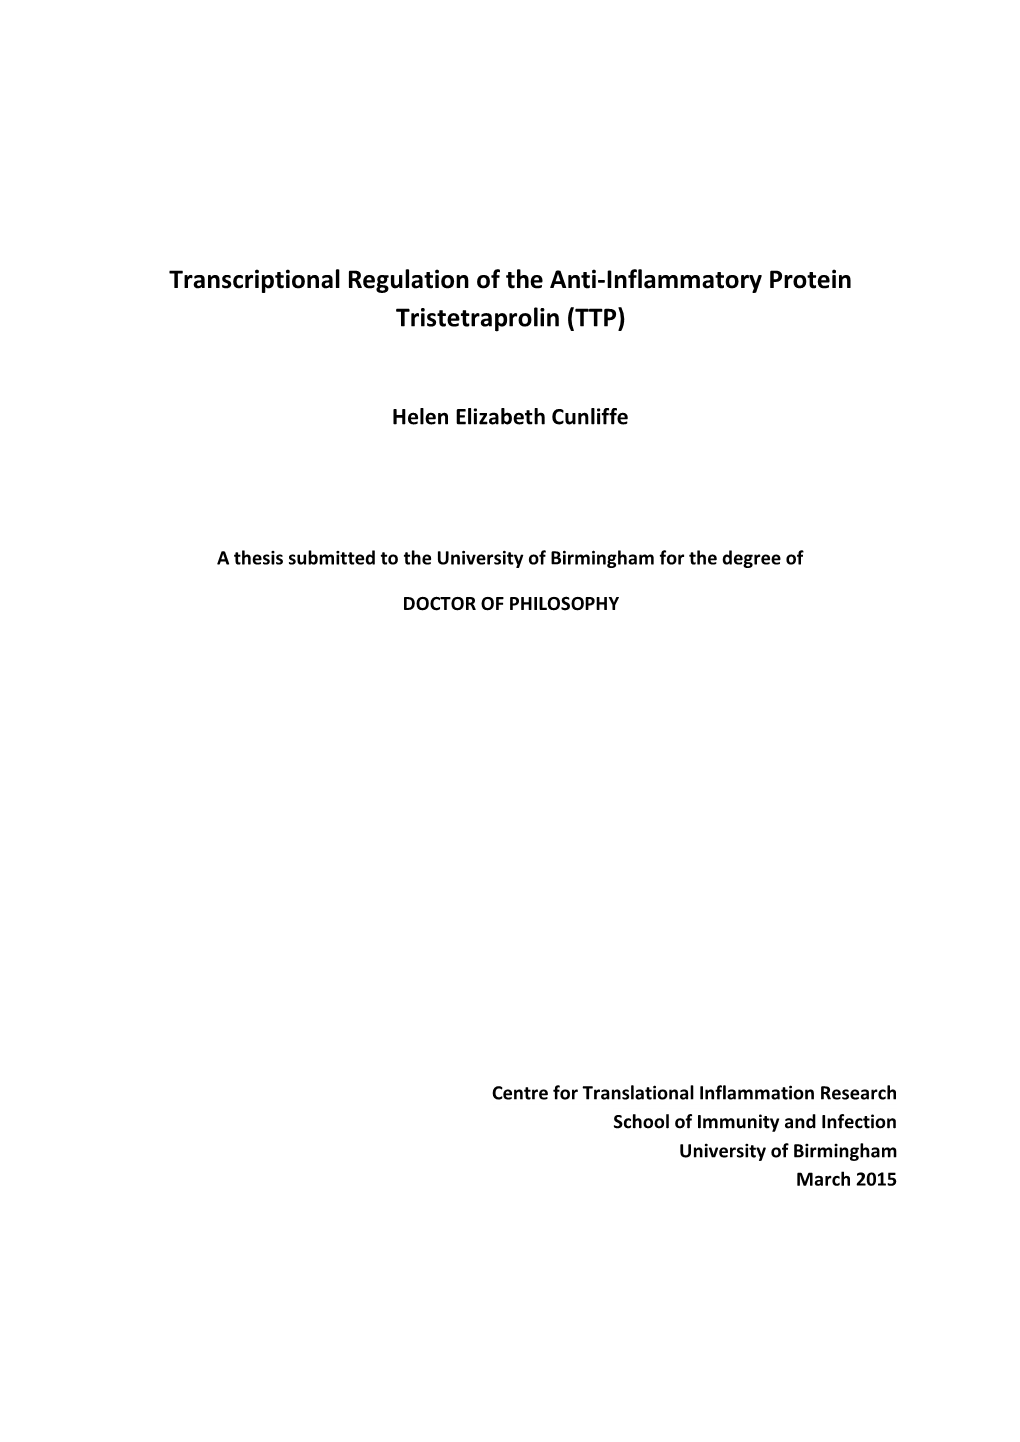 Transcriptional Regulation of the Anti-Inflammatory Protein Tristetraprolin (TTP)